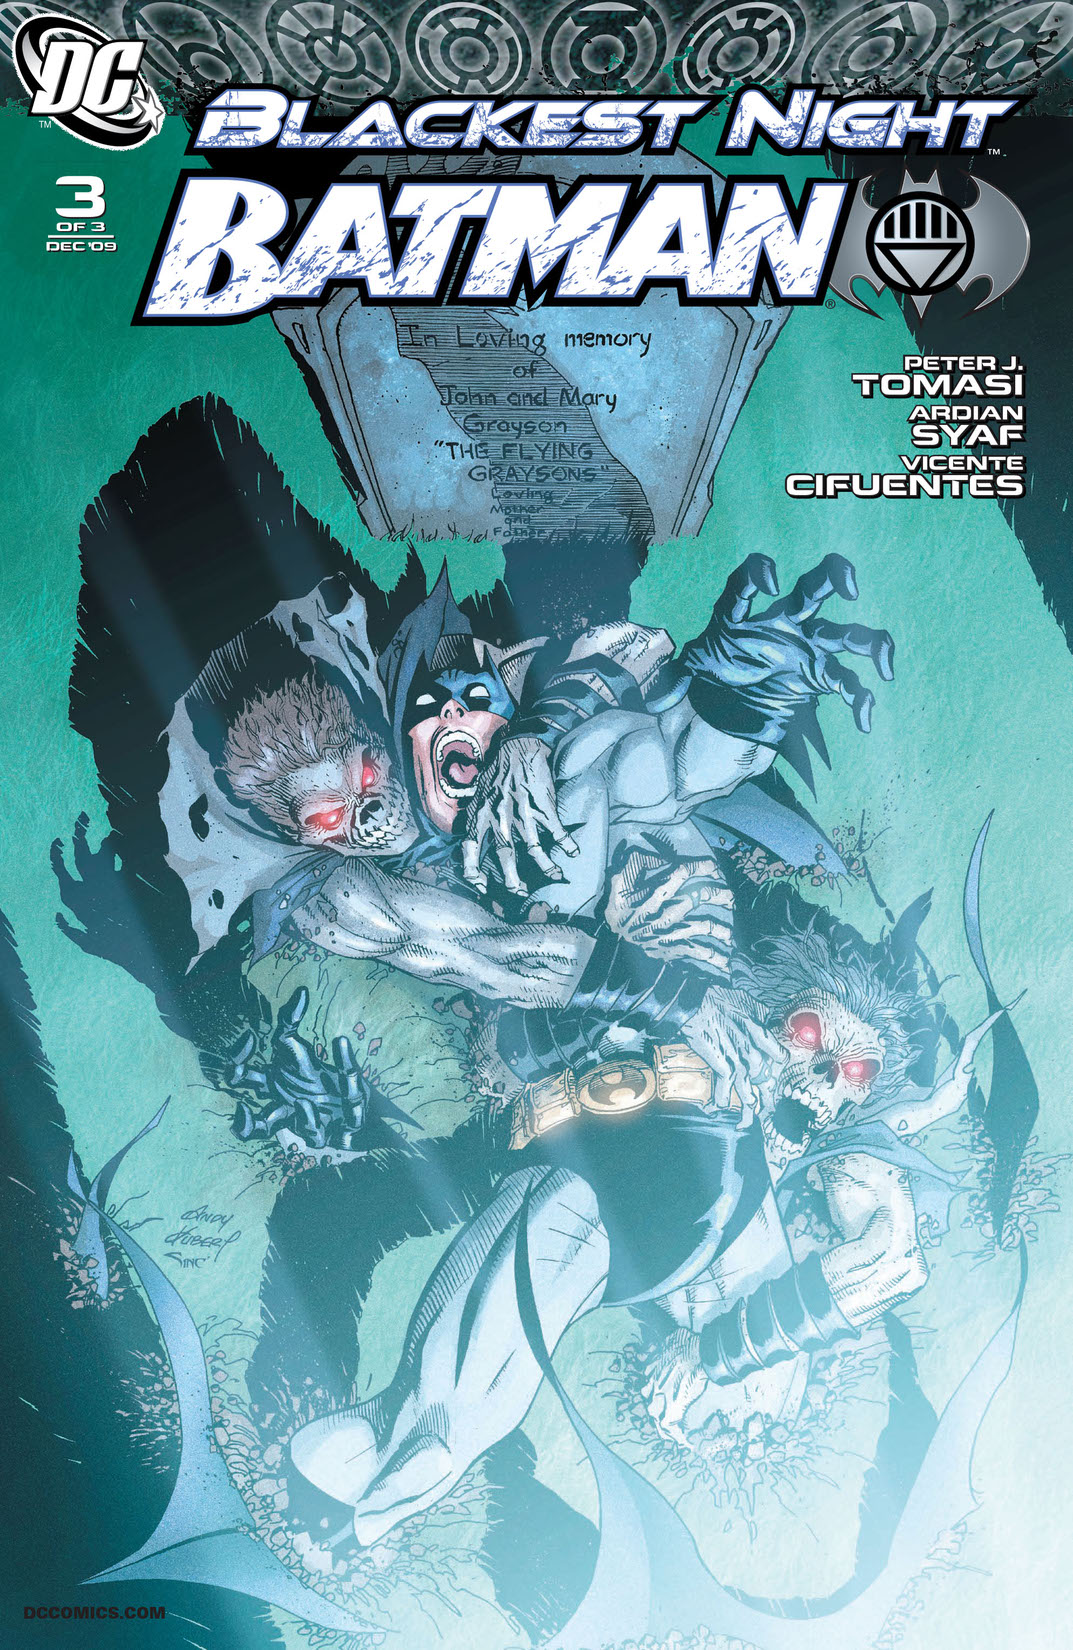 Blackest Night: Batman #3 preview images